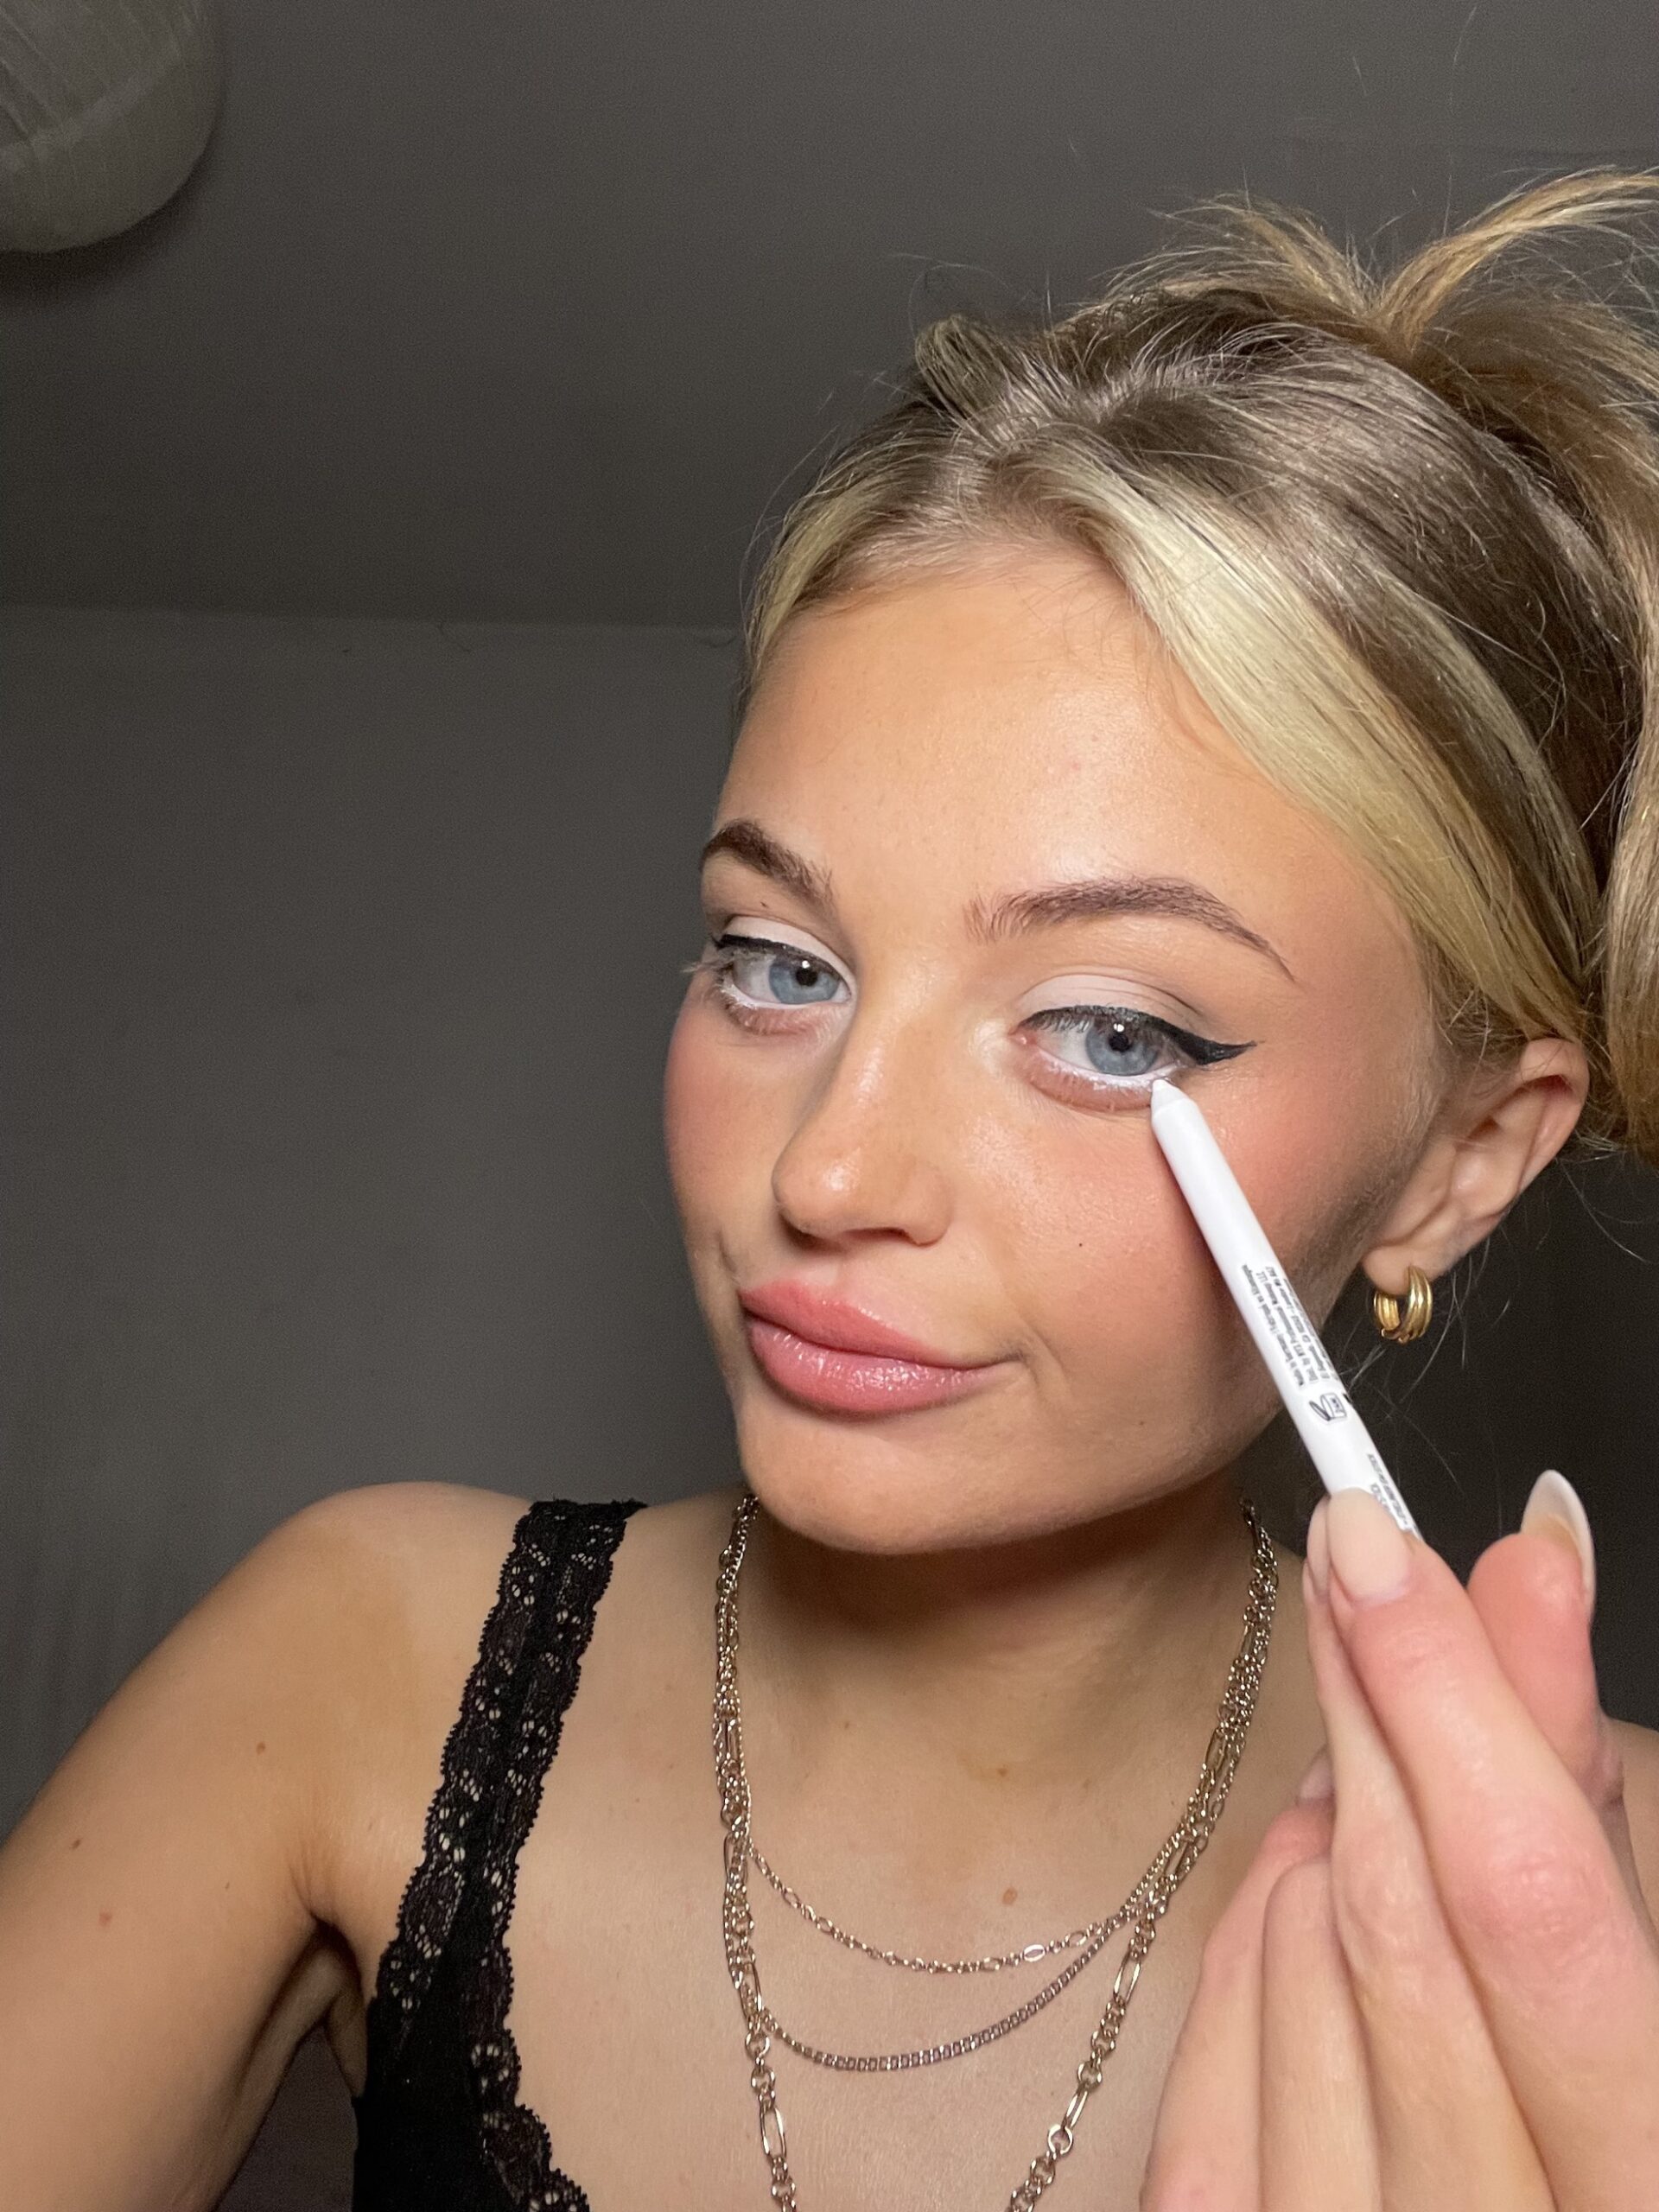 How To Do Doe Eyes Makeup Beauty Bay